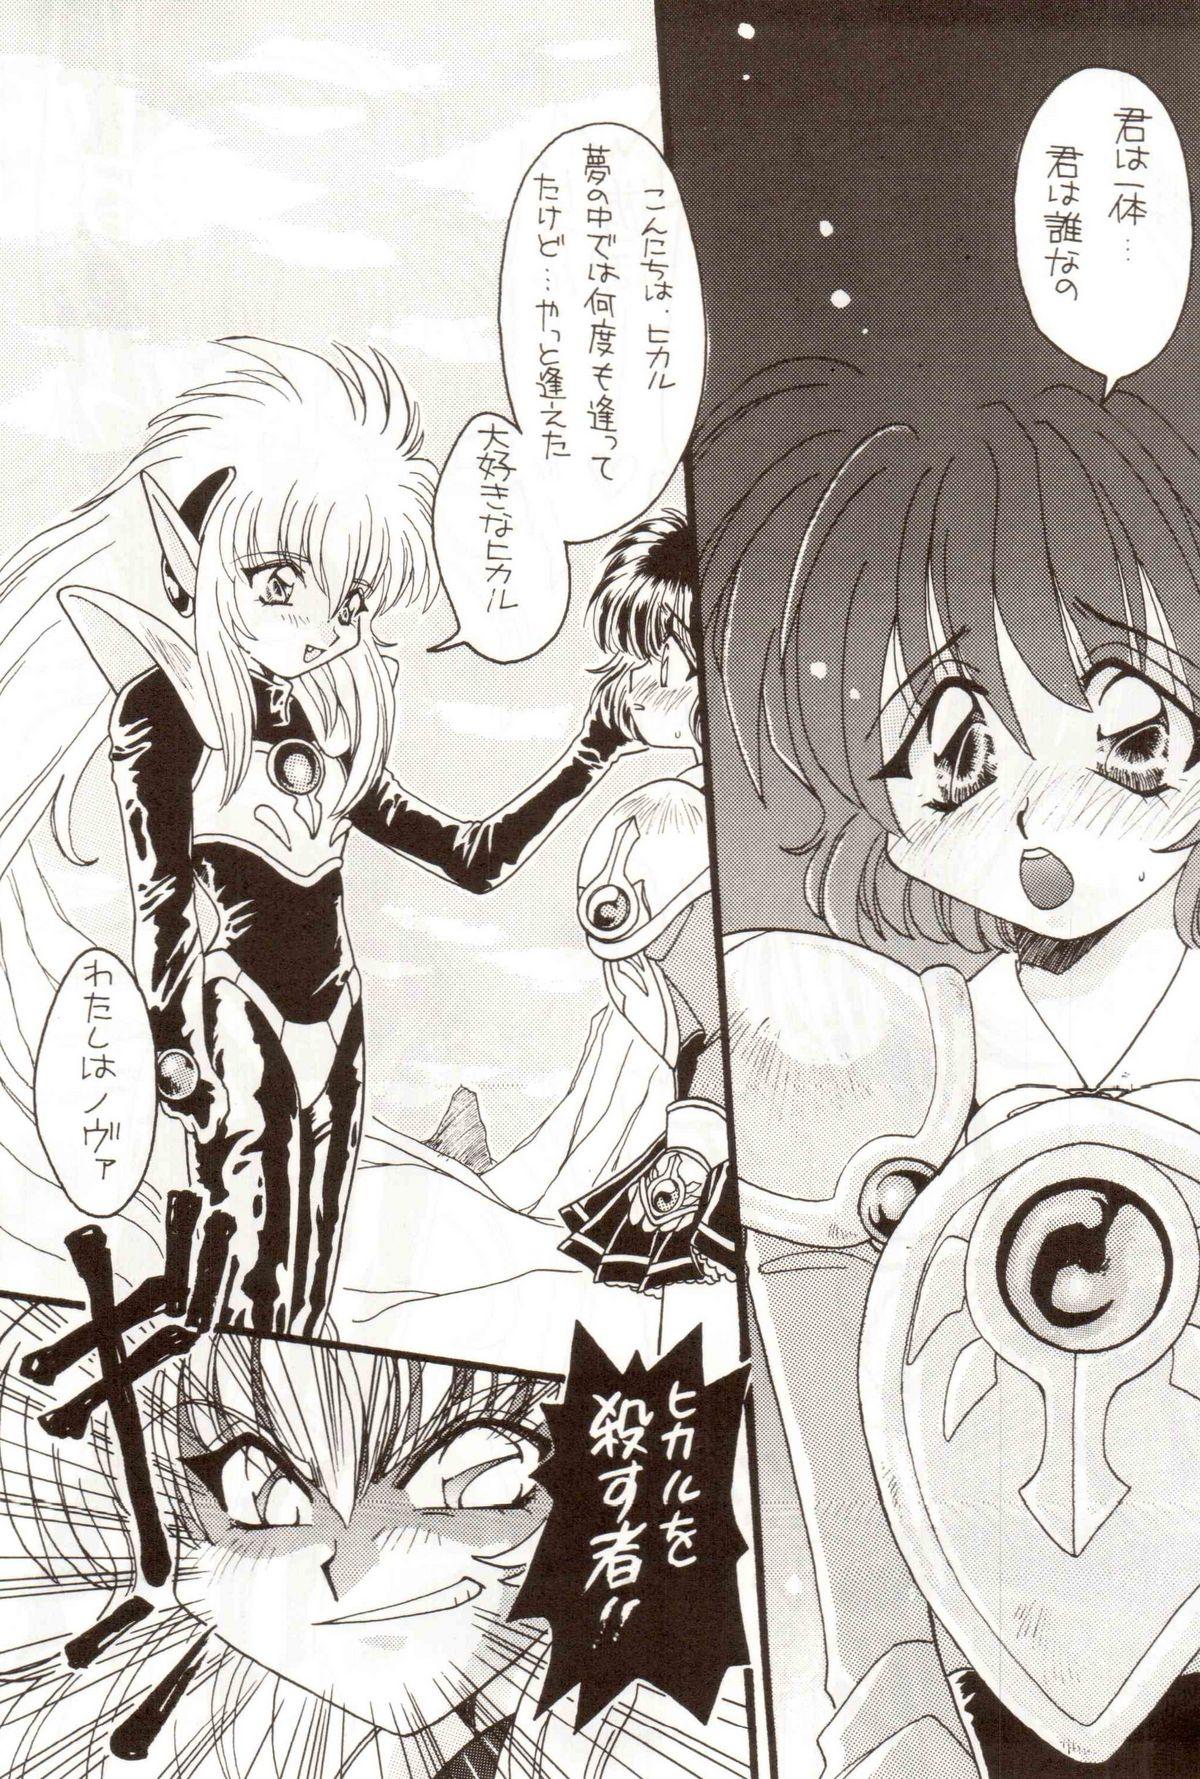 Sexy Bakuhatsu On Parade - Magic knight rayearth Oldvsyoung - Page 6